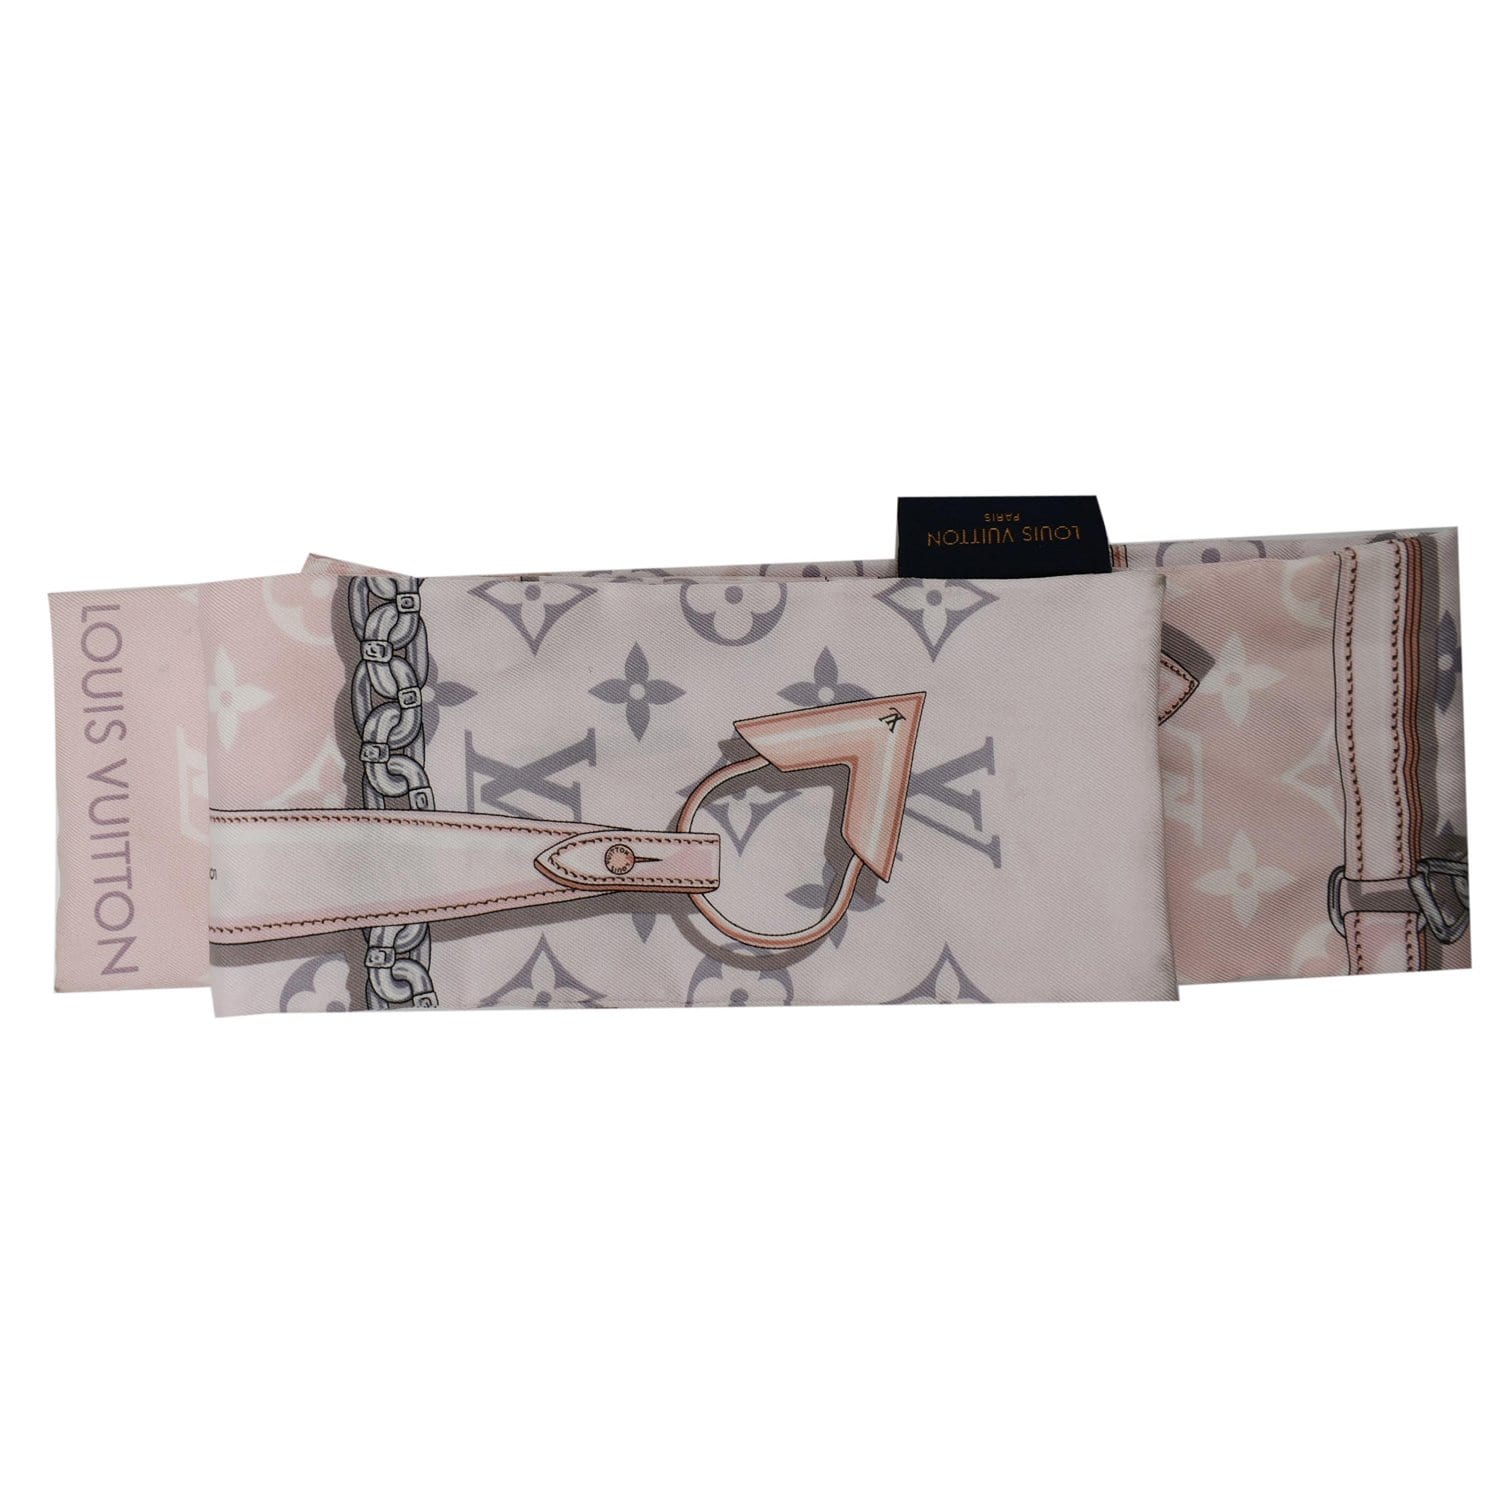 Louis Vuitton Light Pink Silk Monogram Confidential Bandeau Scarf